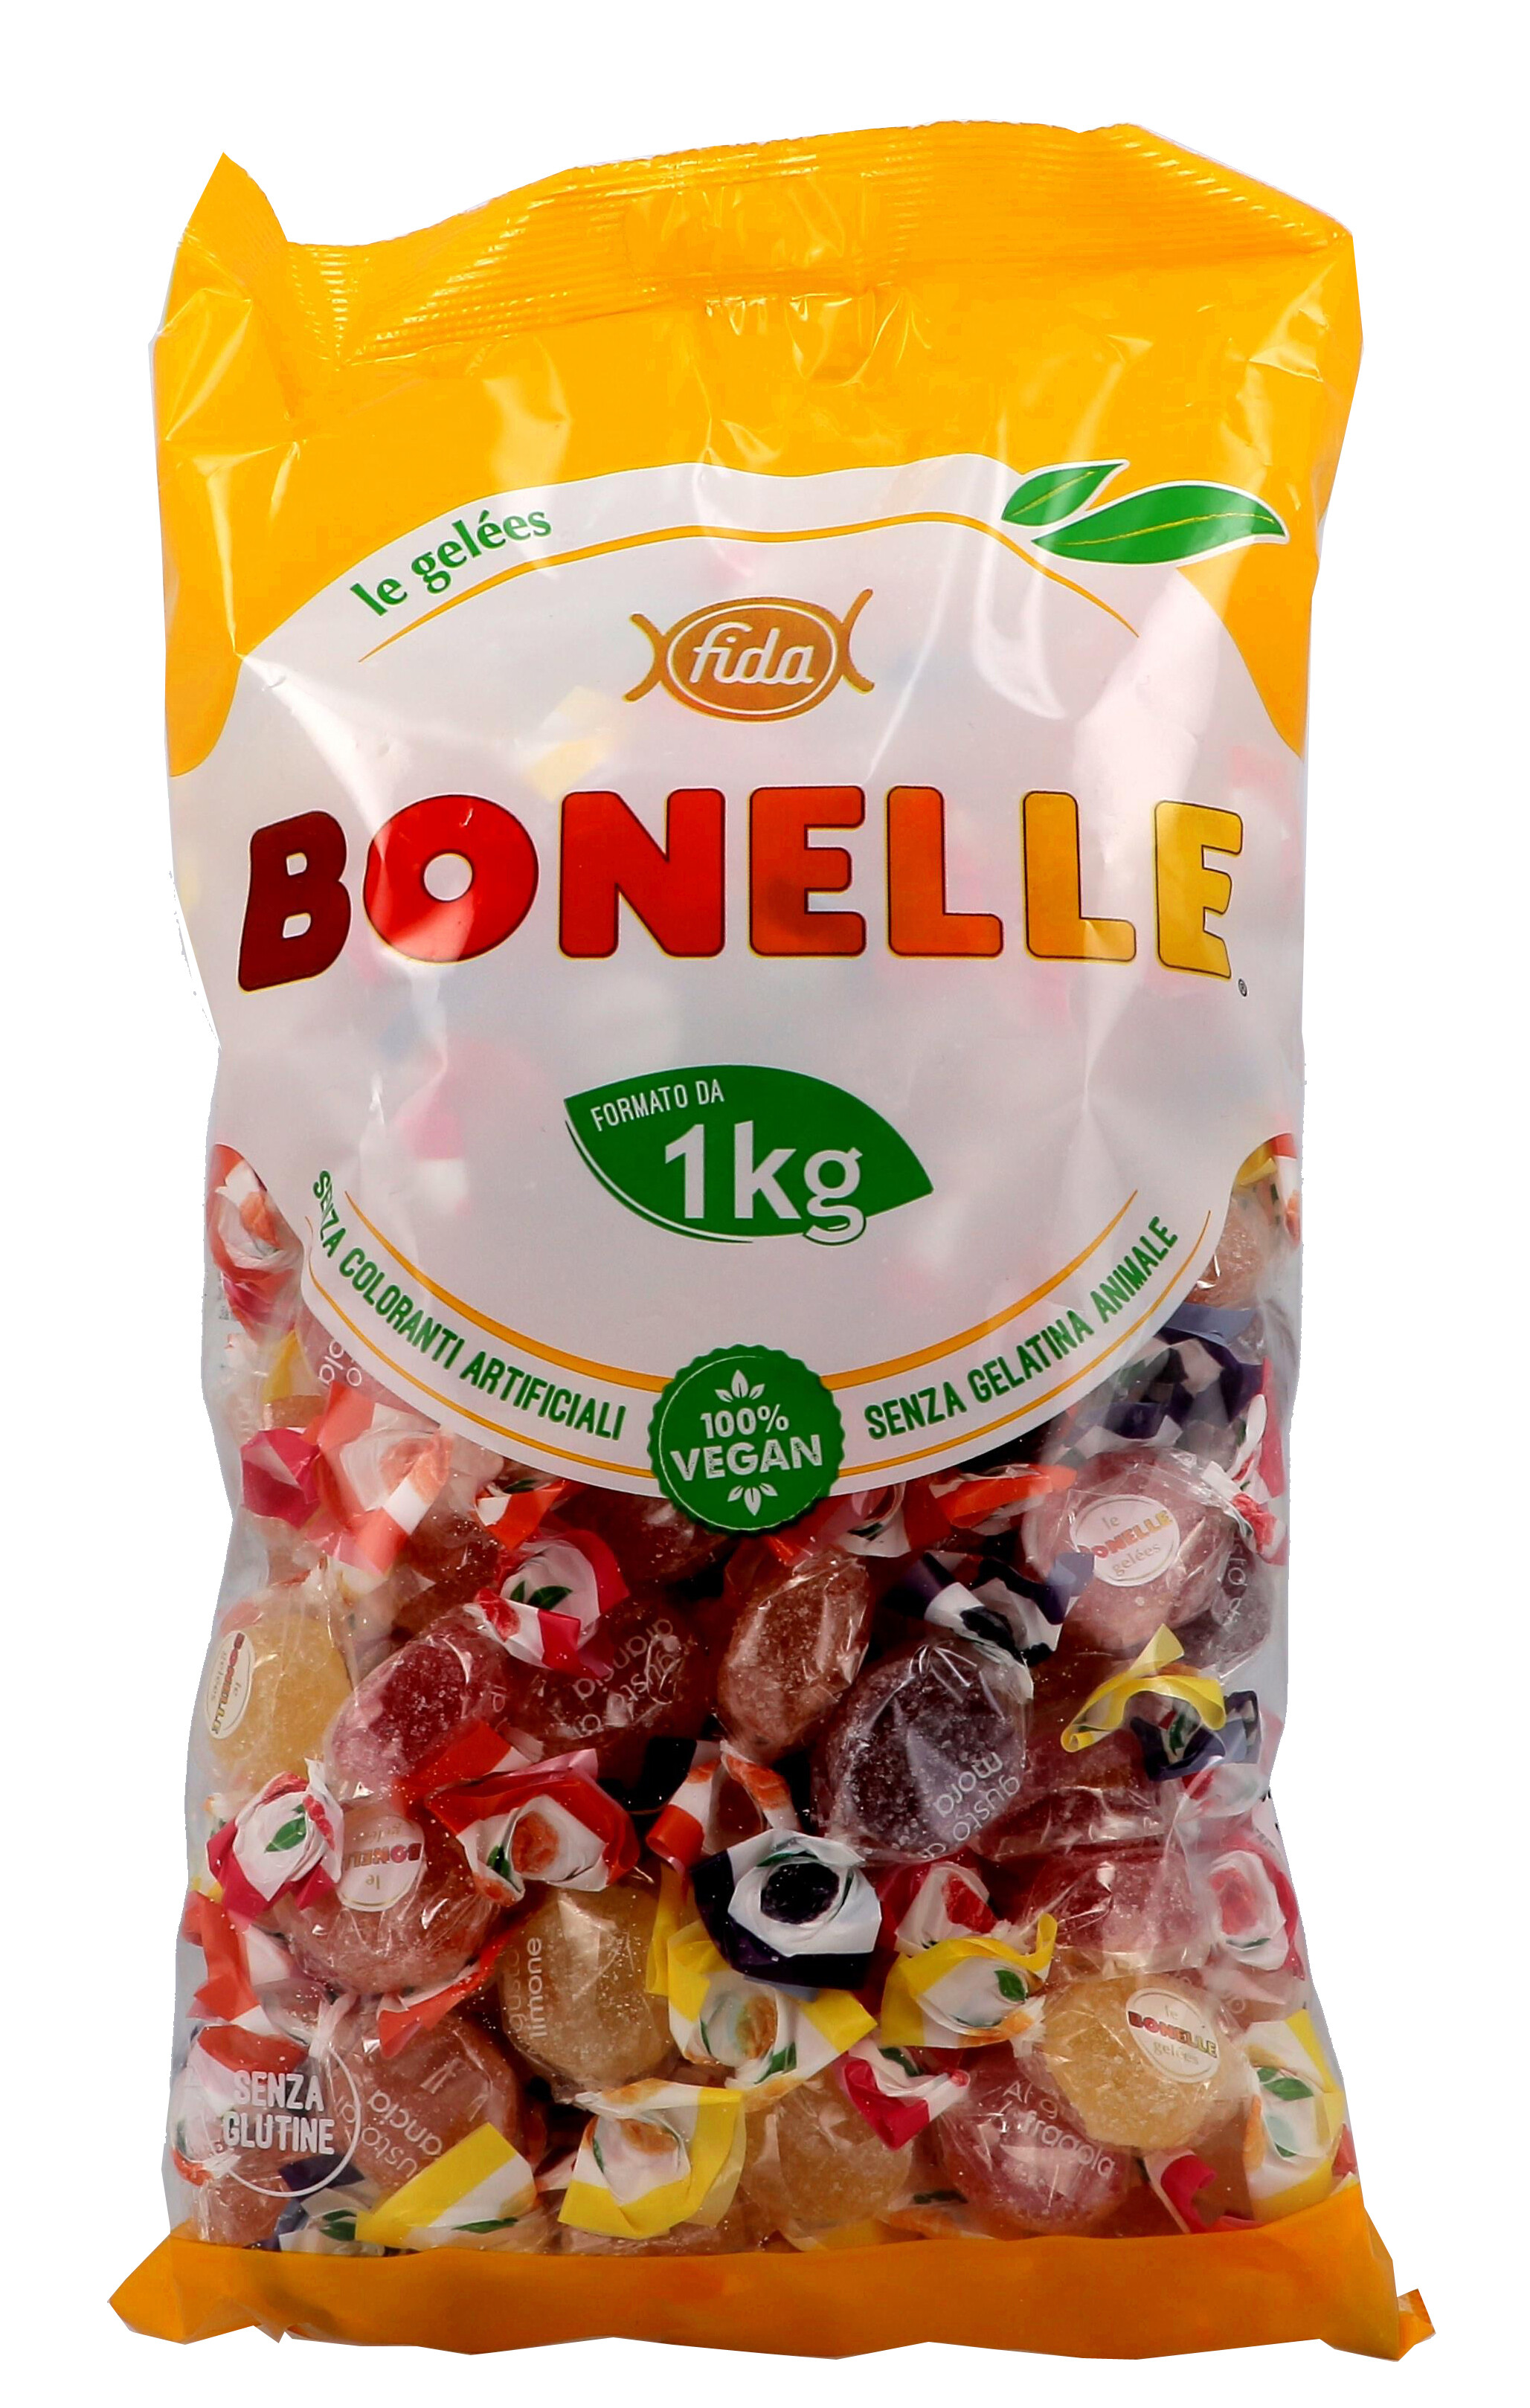 Le Bonelle Gelées Soft Candy Fruti drops 1kg wrapped individually